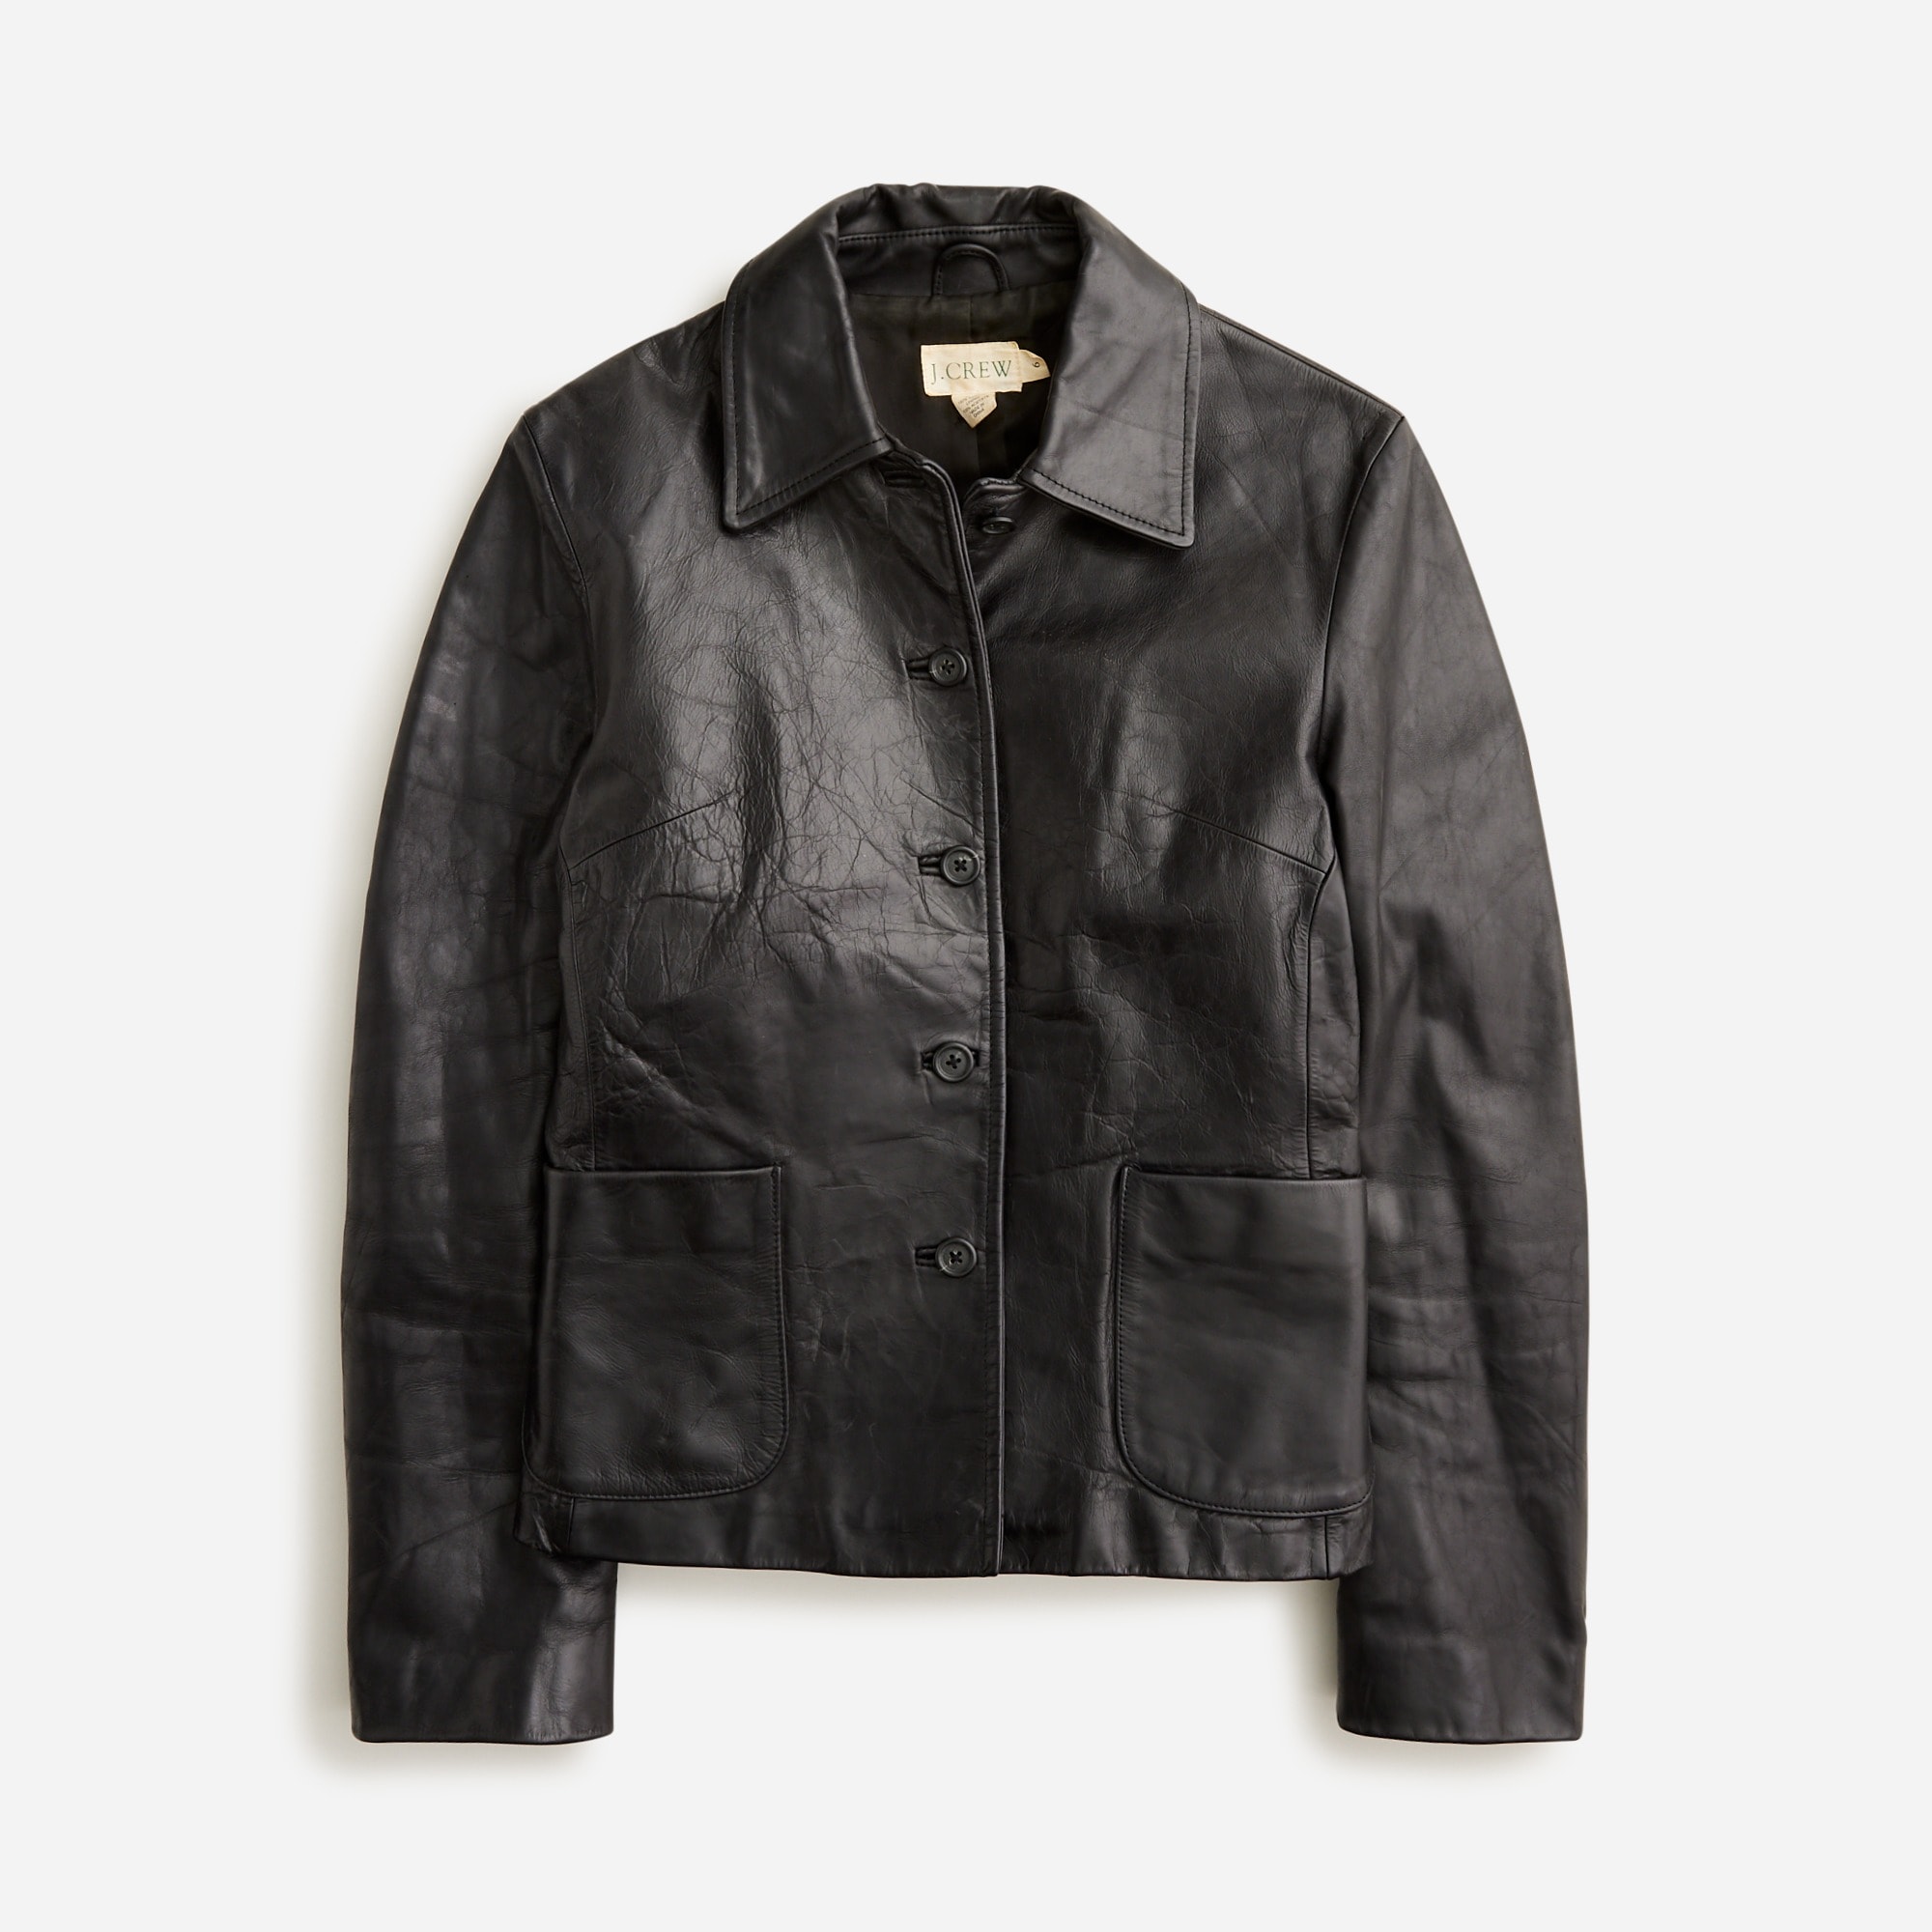  Vintage J.Crew '90s leather blazer-jacket